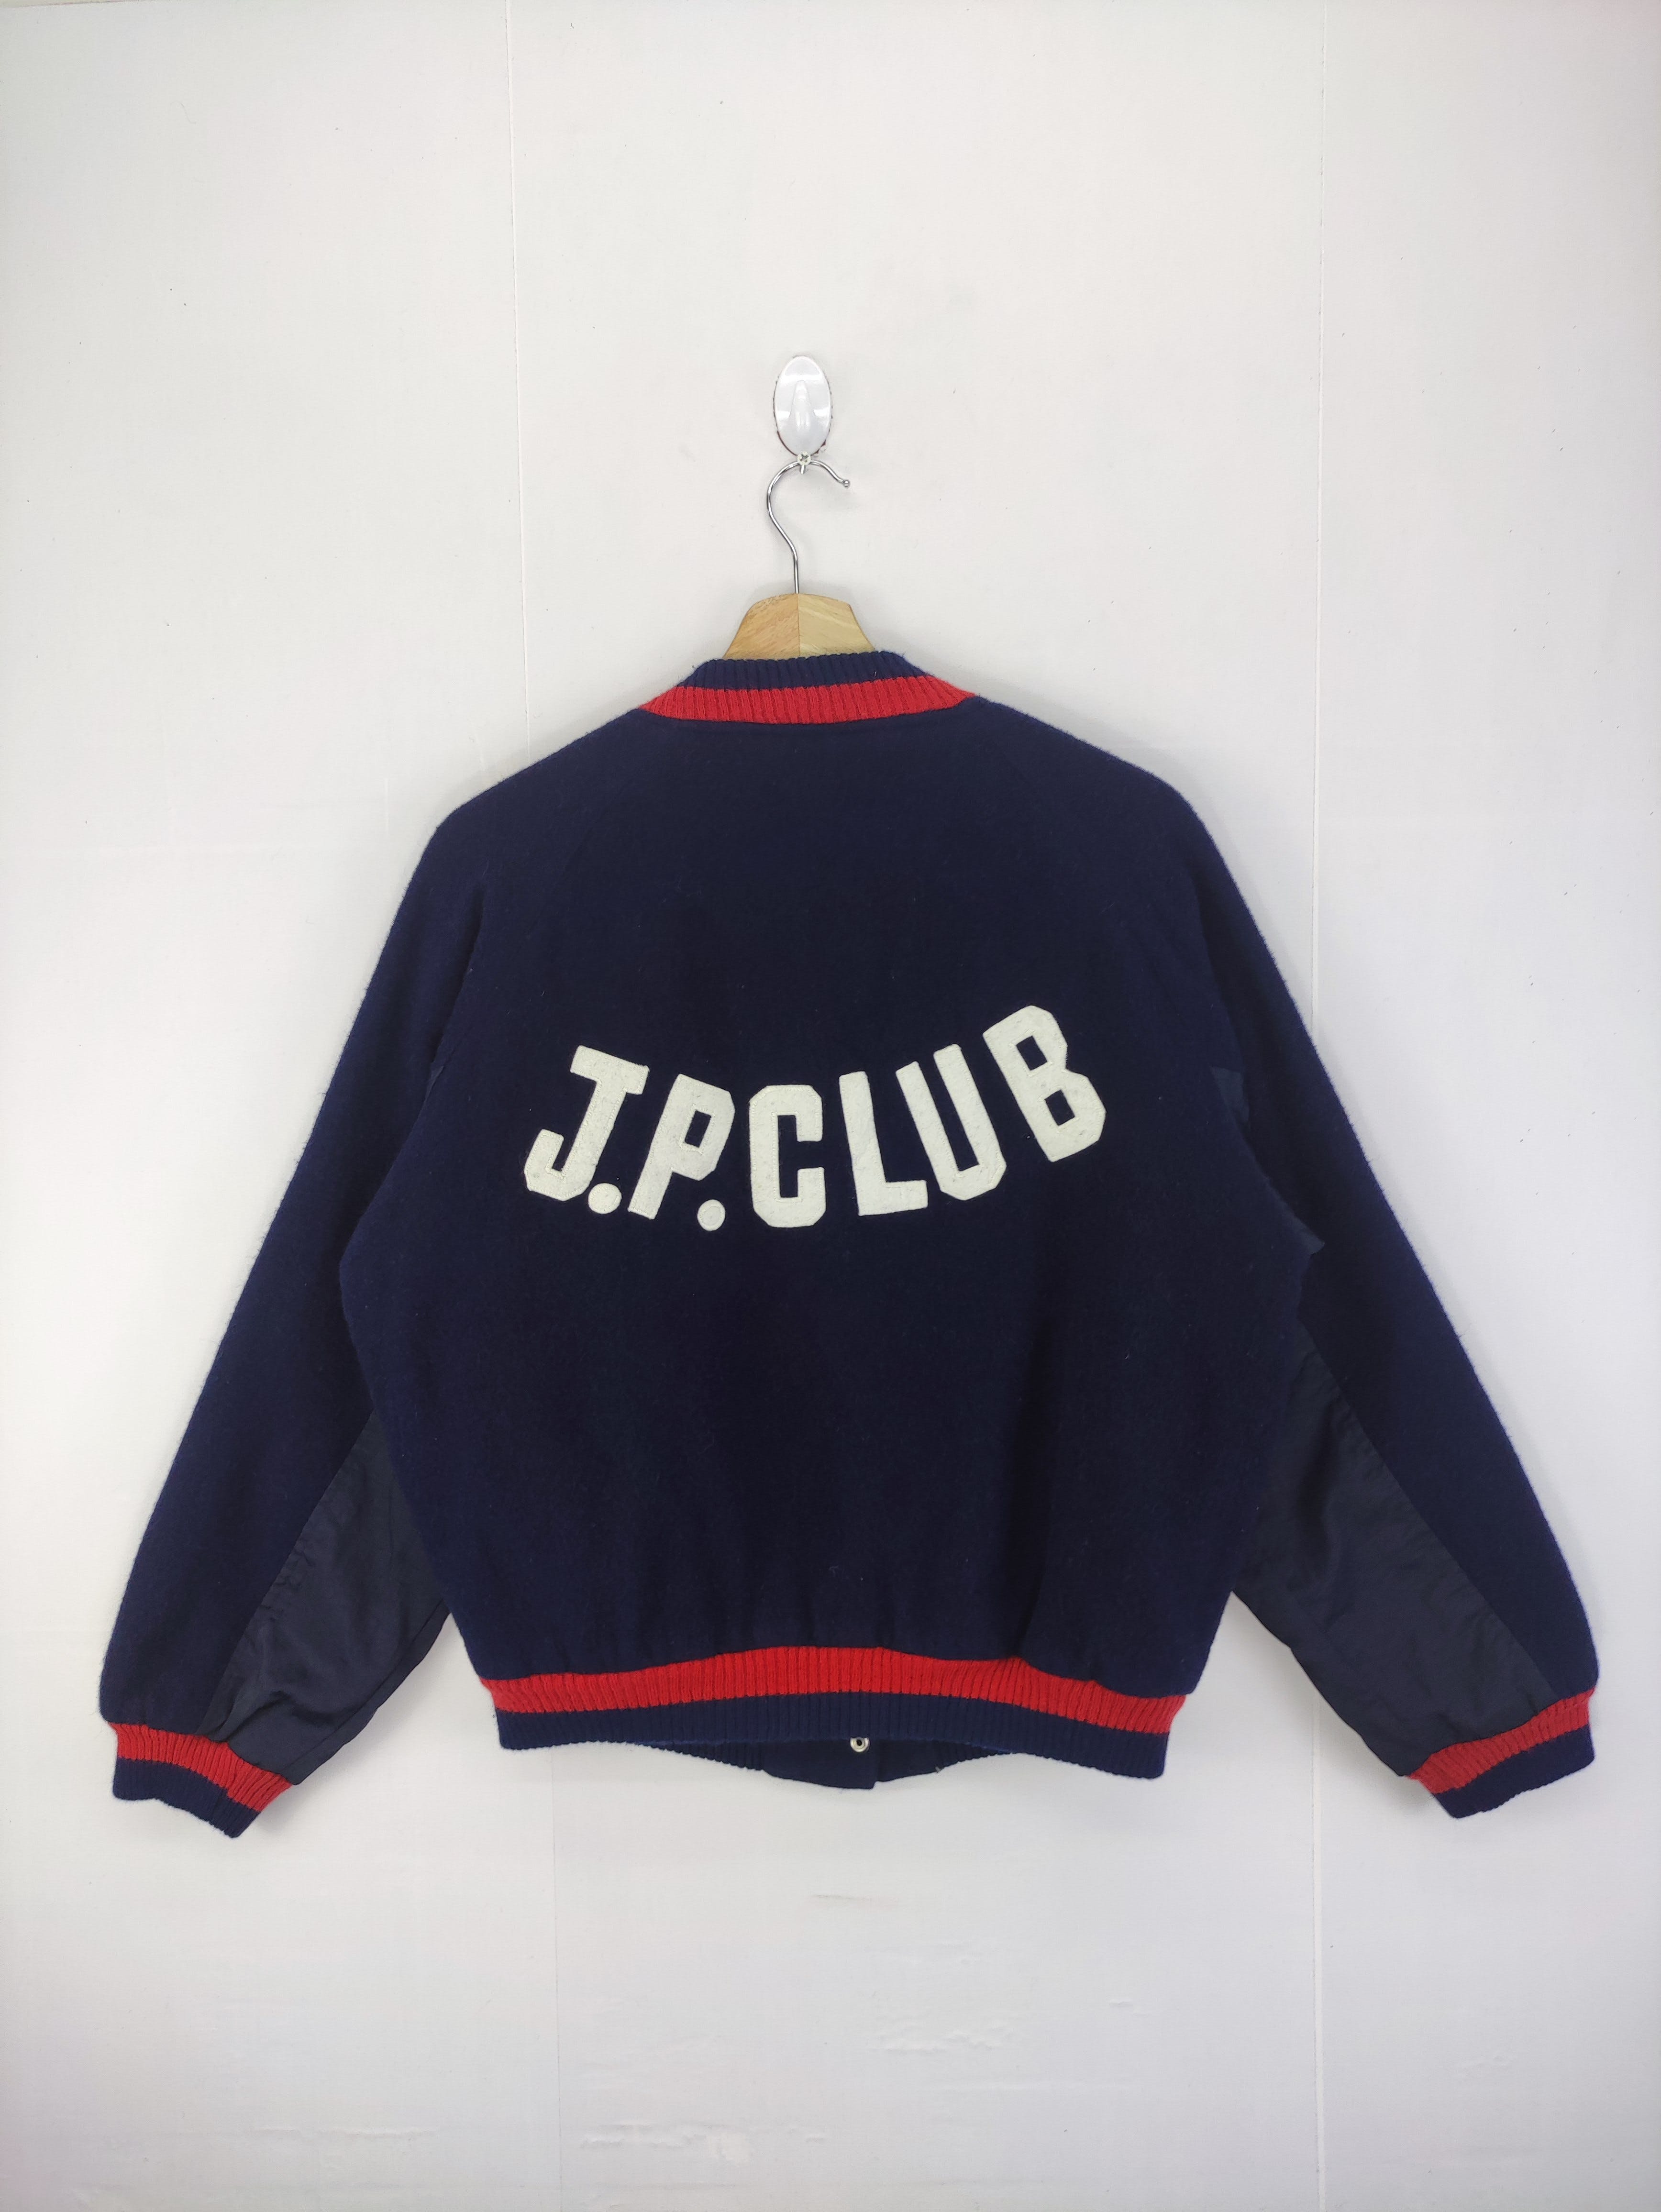 Vintage JP Club Wool Jacket Snap Button - 7